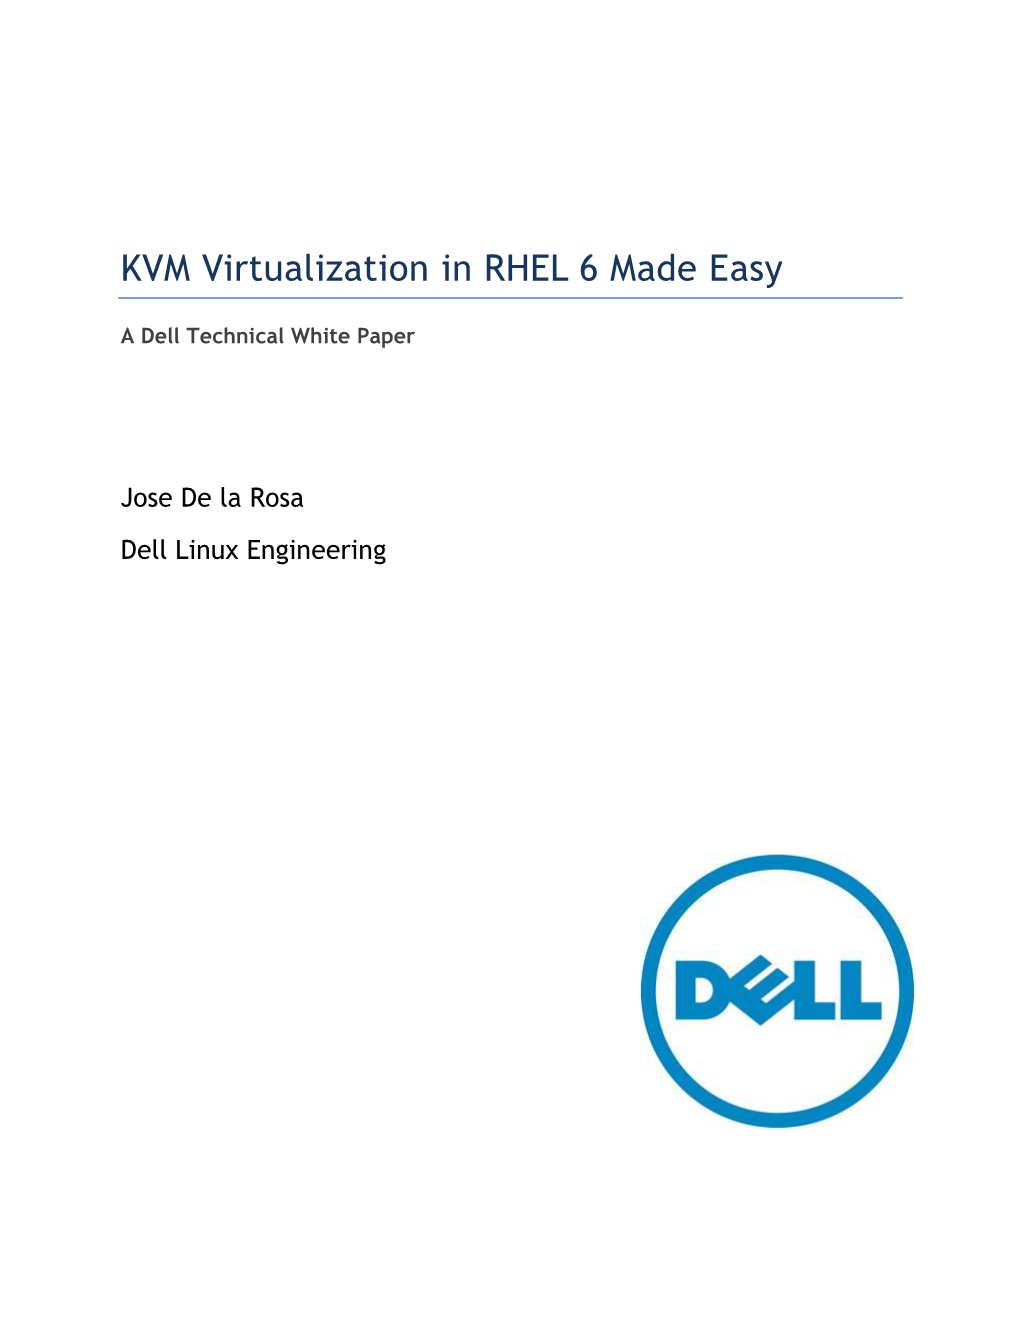 DELL KVM Virtualization in RHEL 6 Made Easy